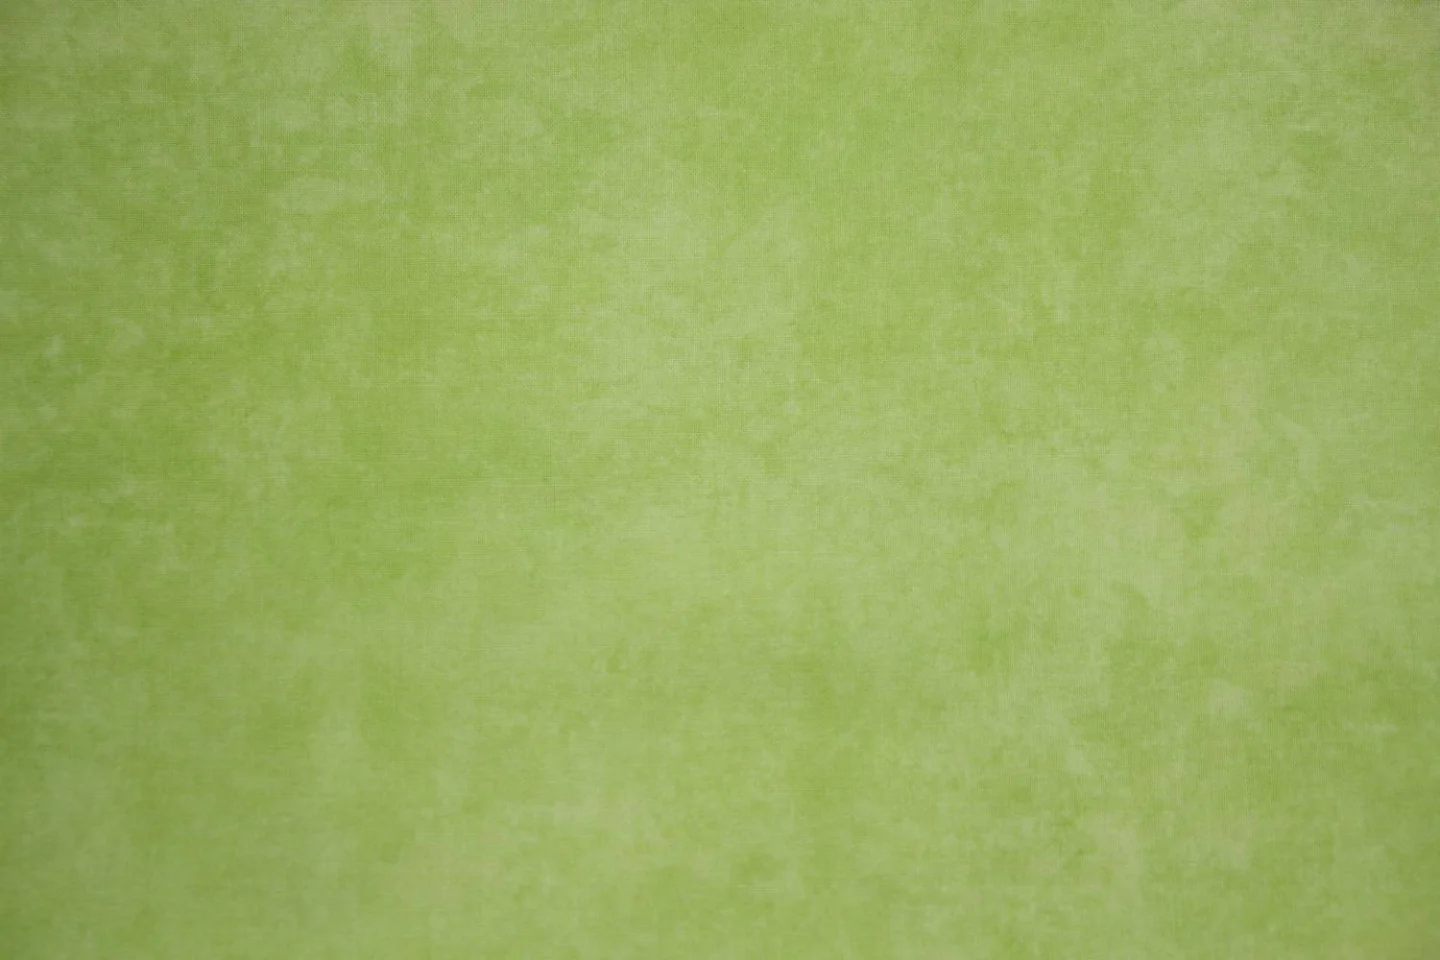 quiltstof-kiwi groen-gevlamd-Shadow Play.